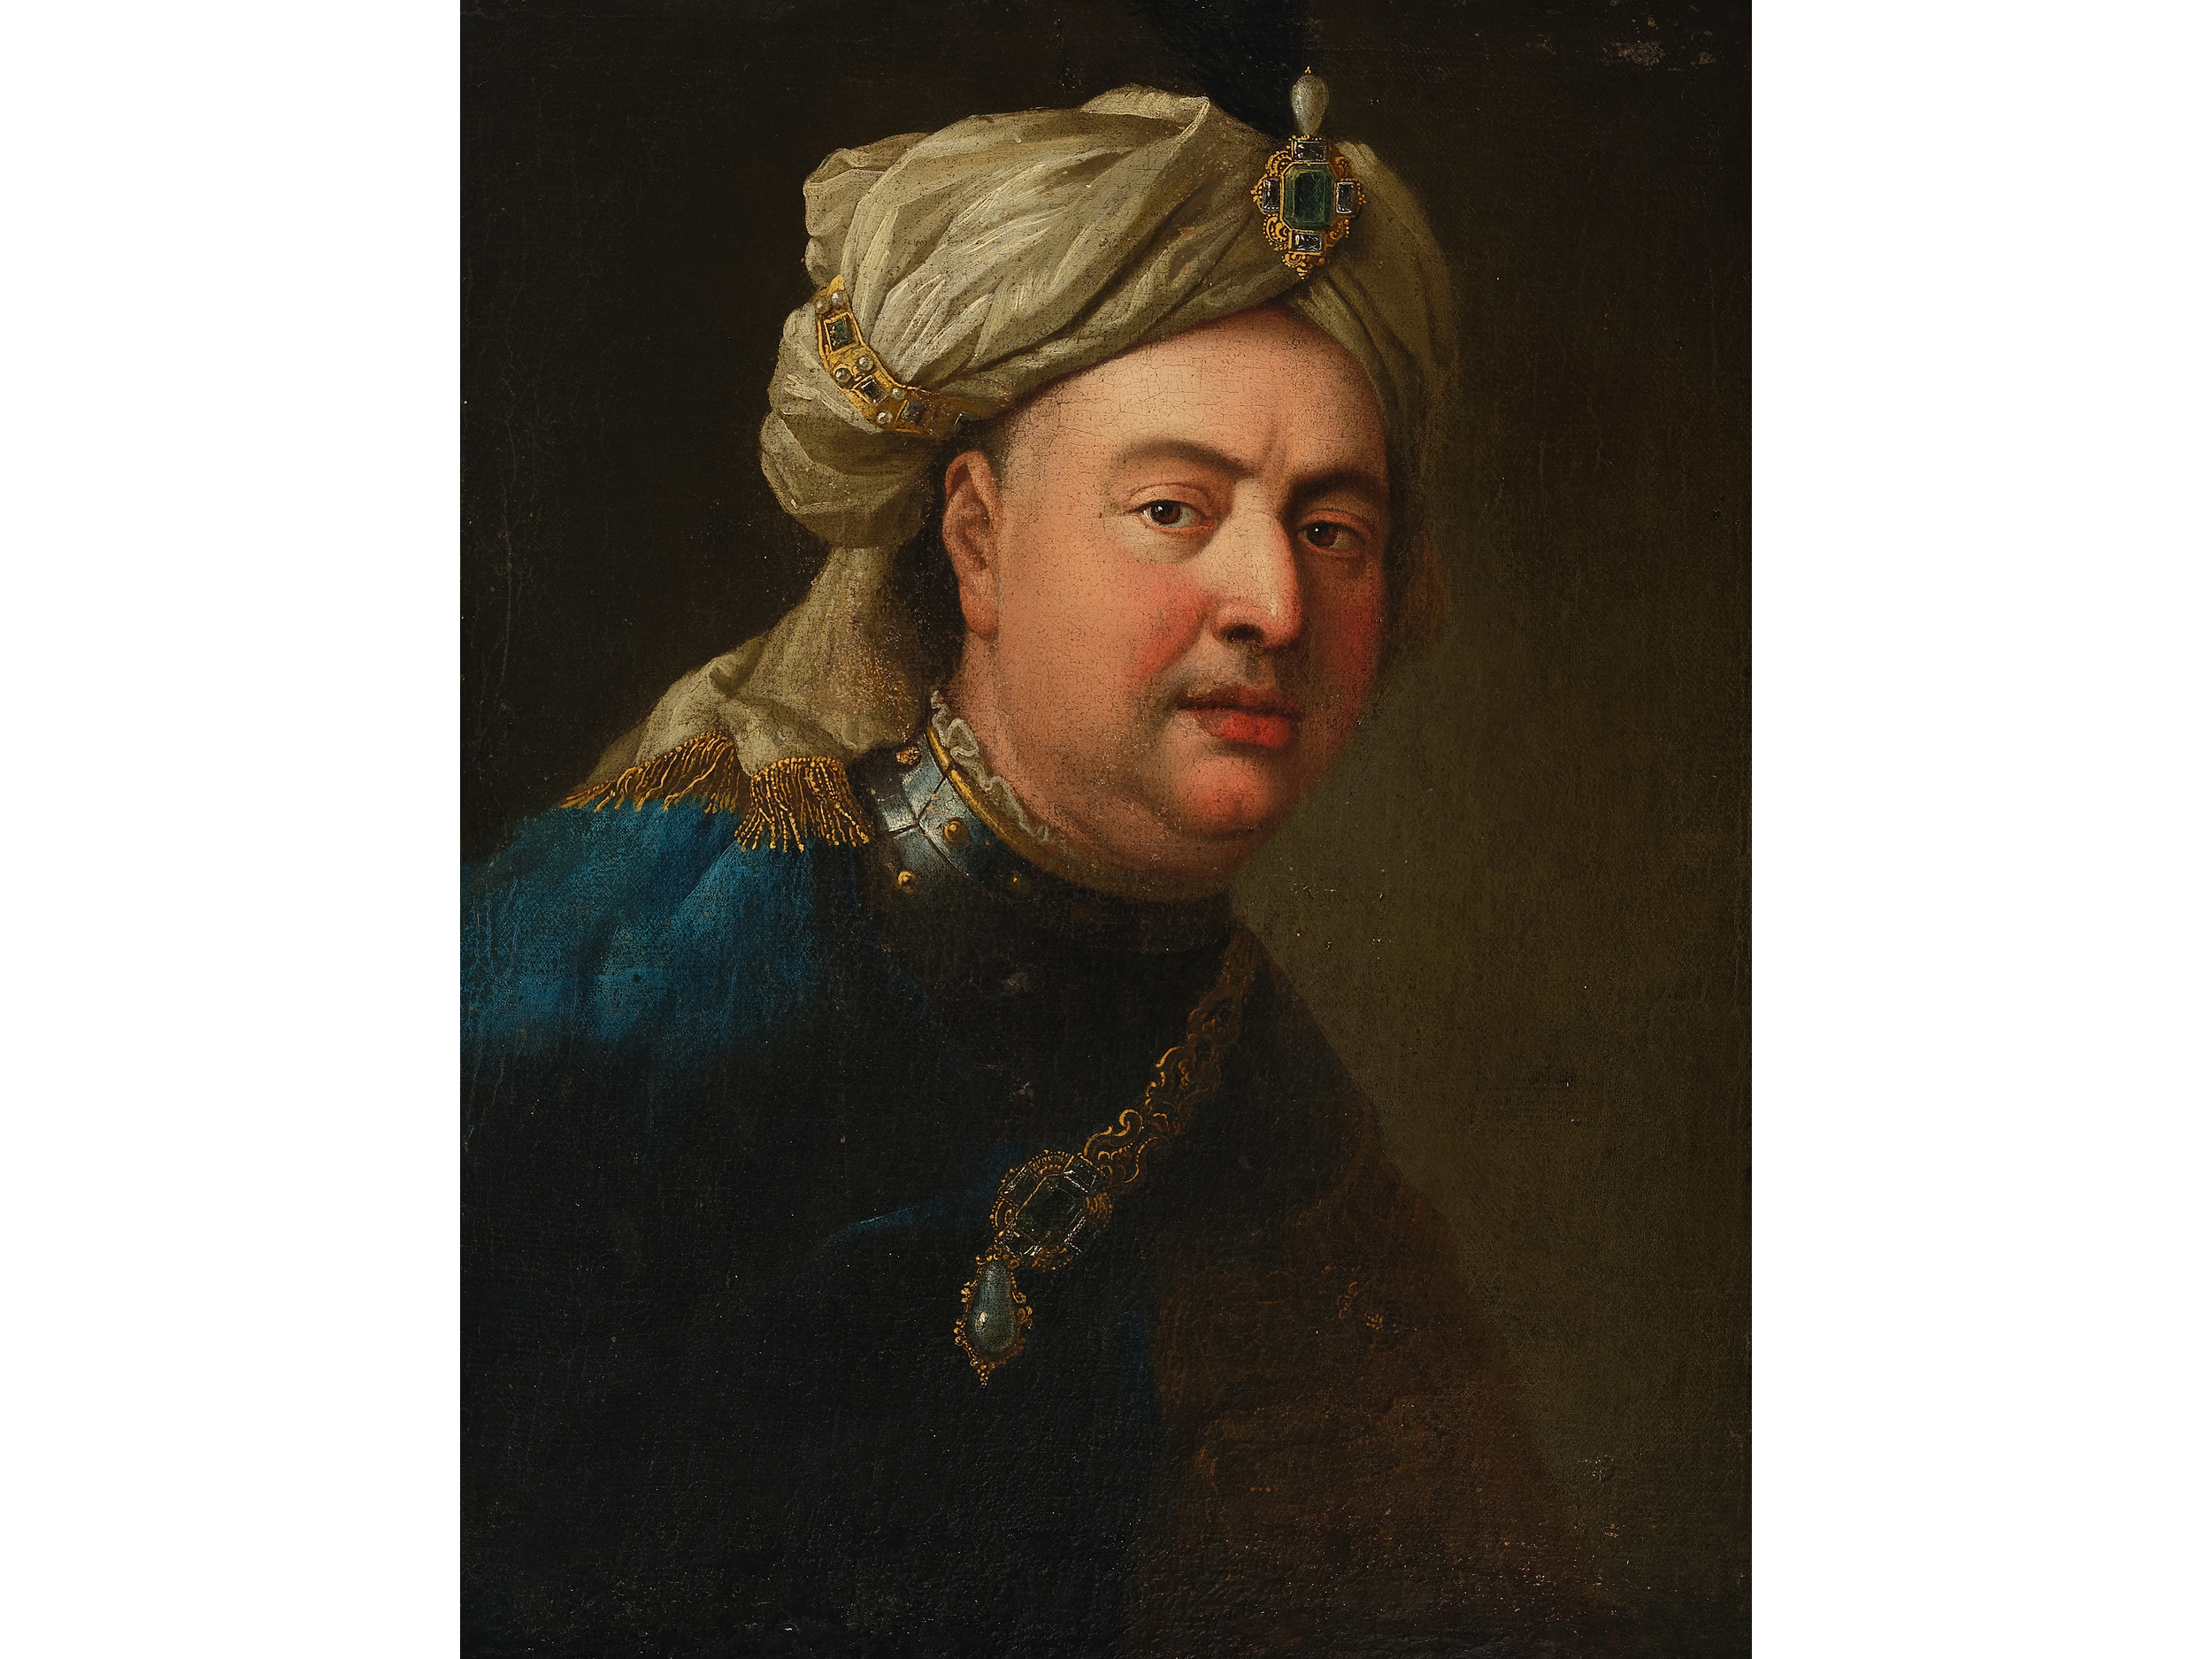 Portrait of King John III Sobieski (1629-1696)